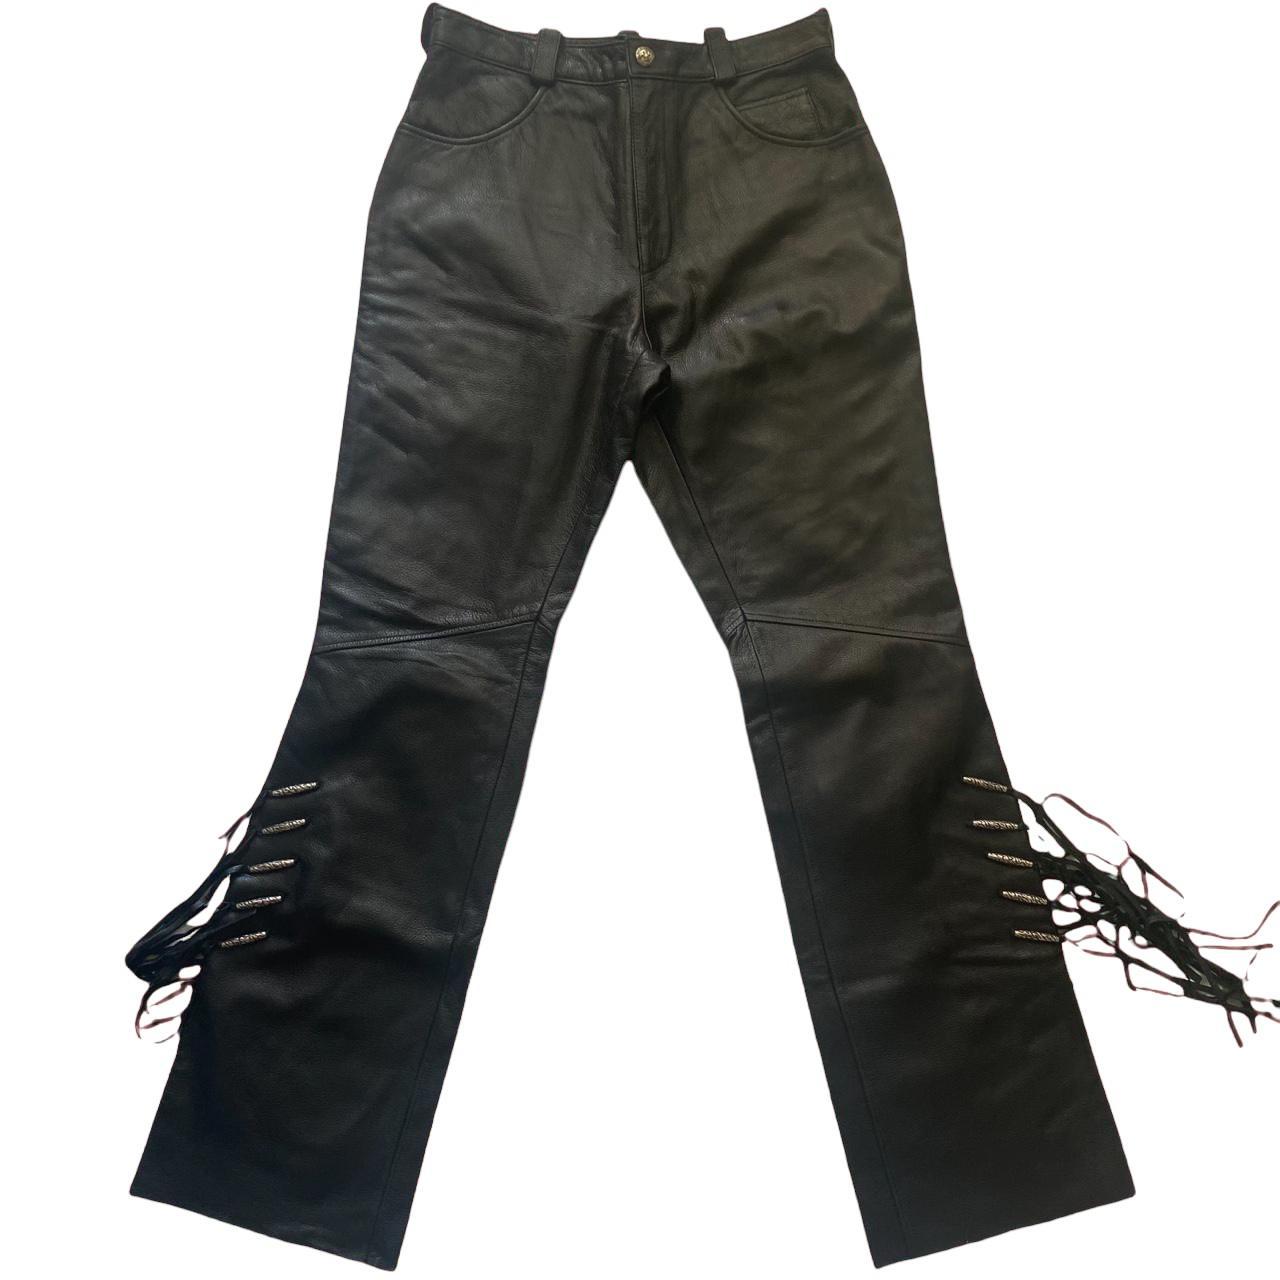 LEATHER PANTS, brand: harley davidson, ‘motorcycle’